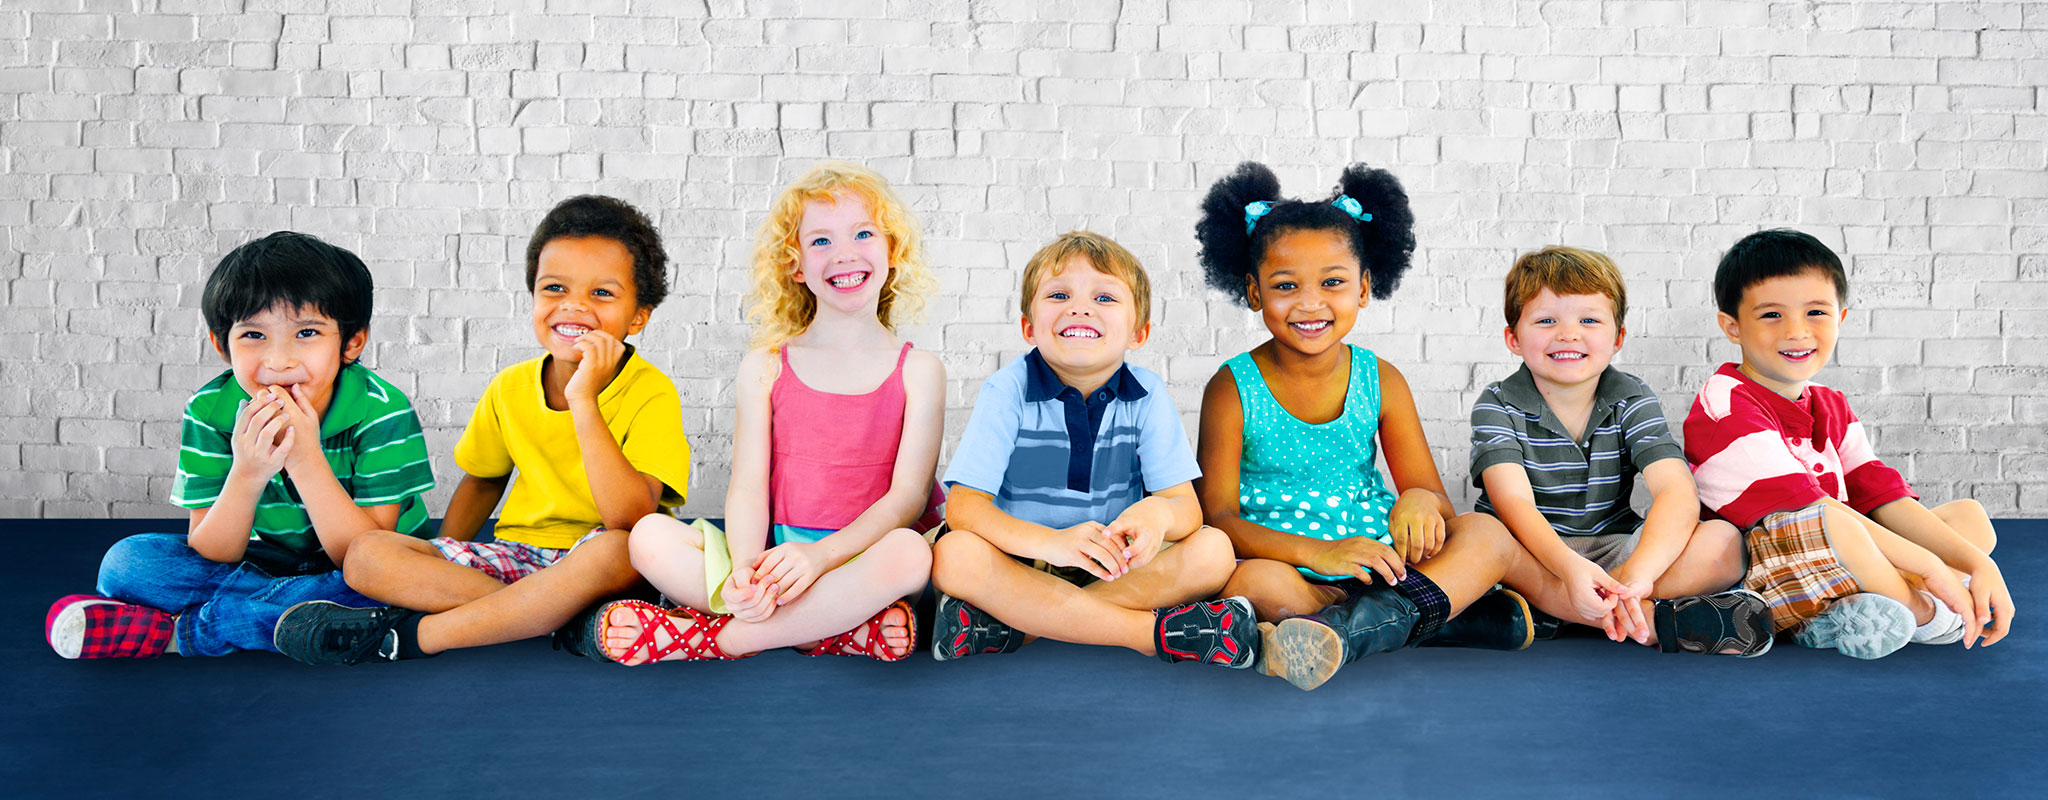 Group of kids sitting on floor Banner image for Gwinnett Pediatrics and Adolescent Medicine, Gwinnett Pediatricians